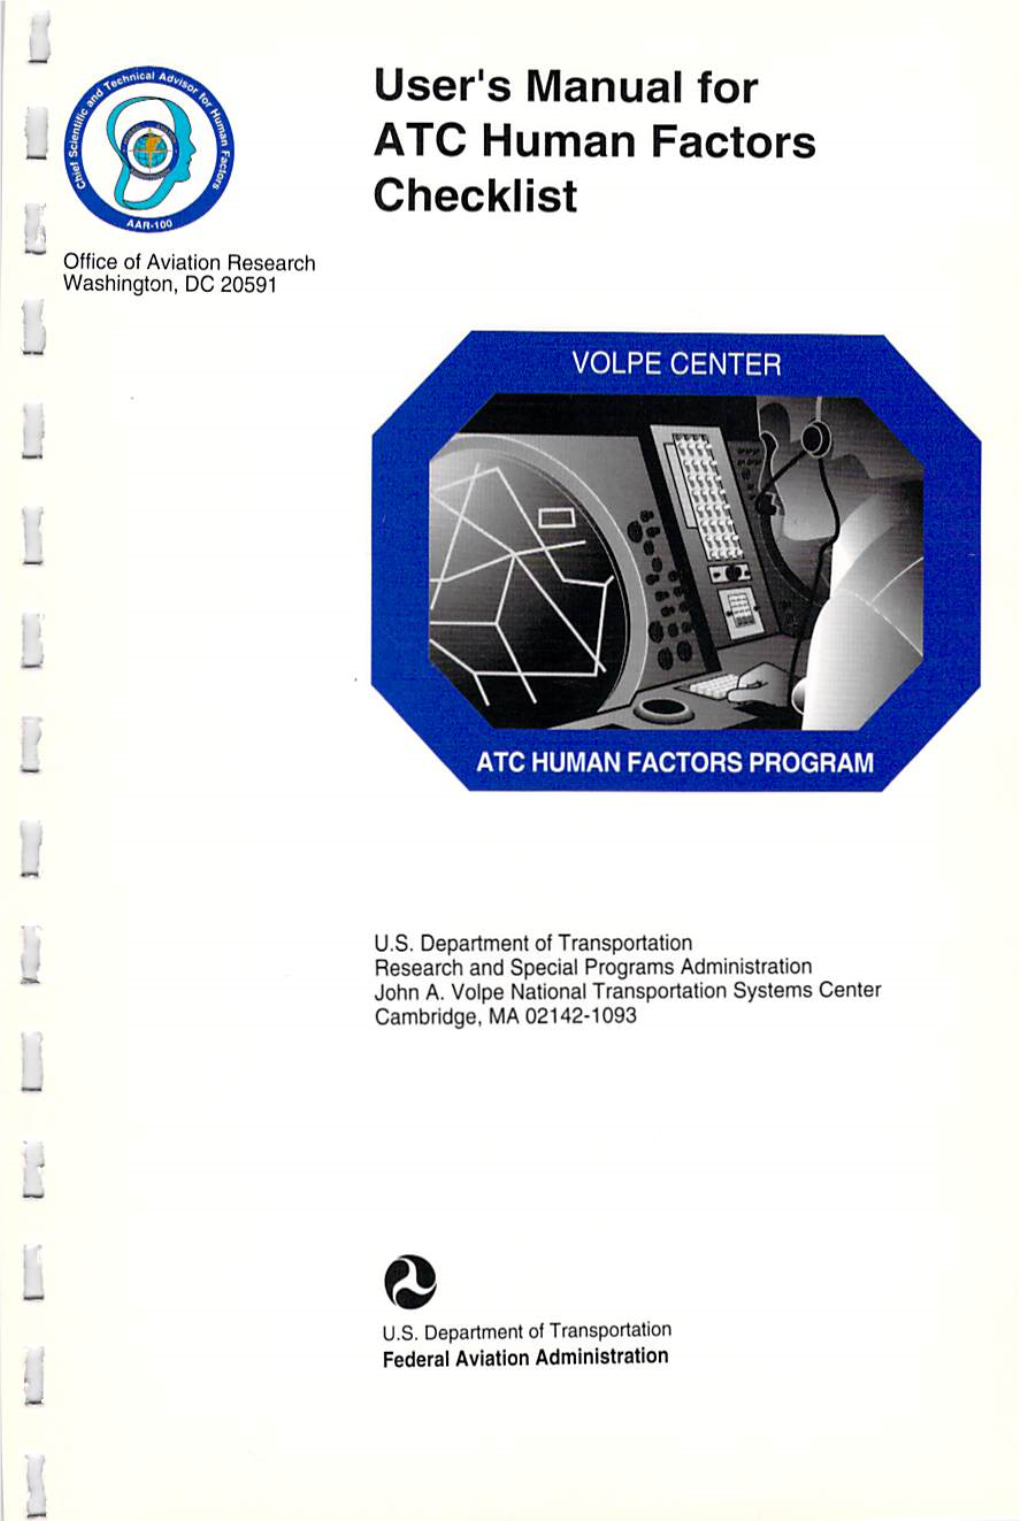 User's Manual for ATC Human Factors Checklist